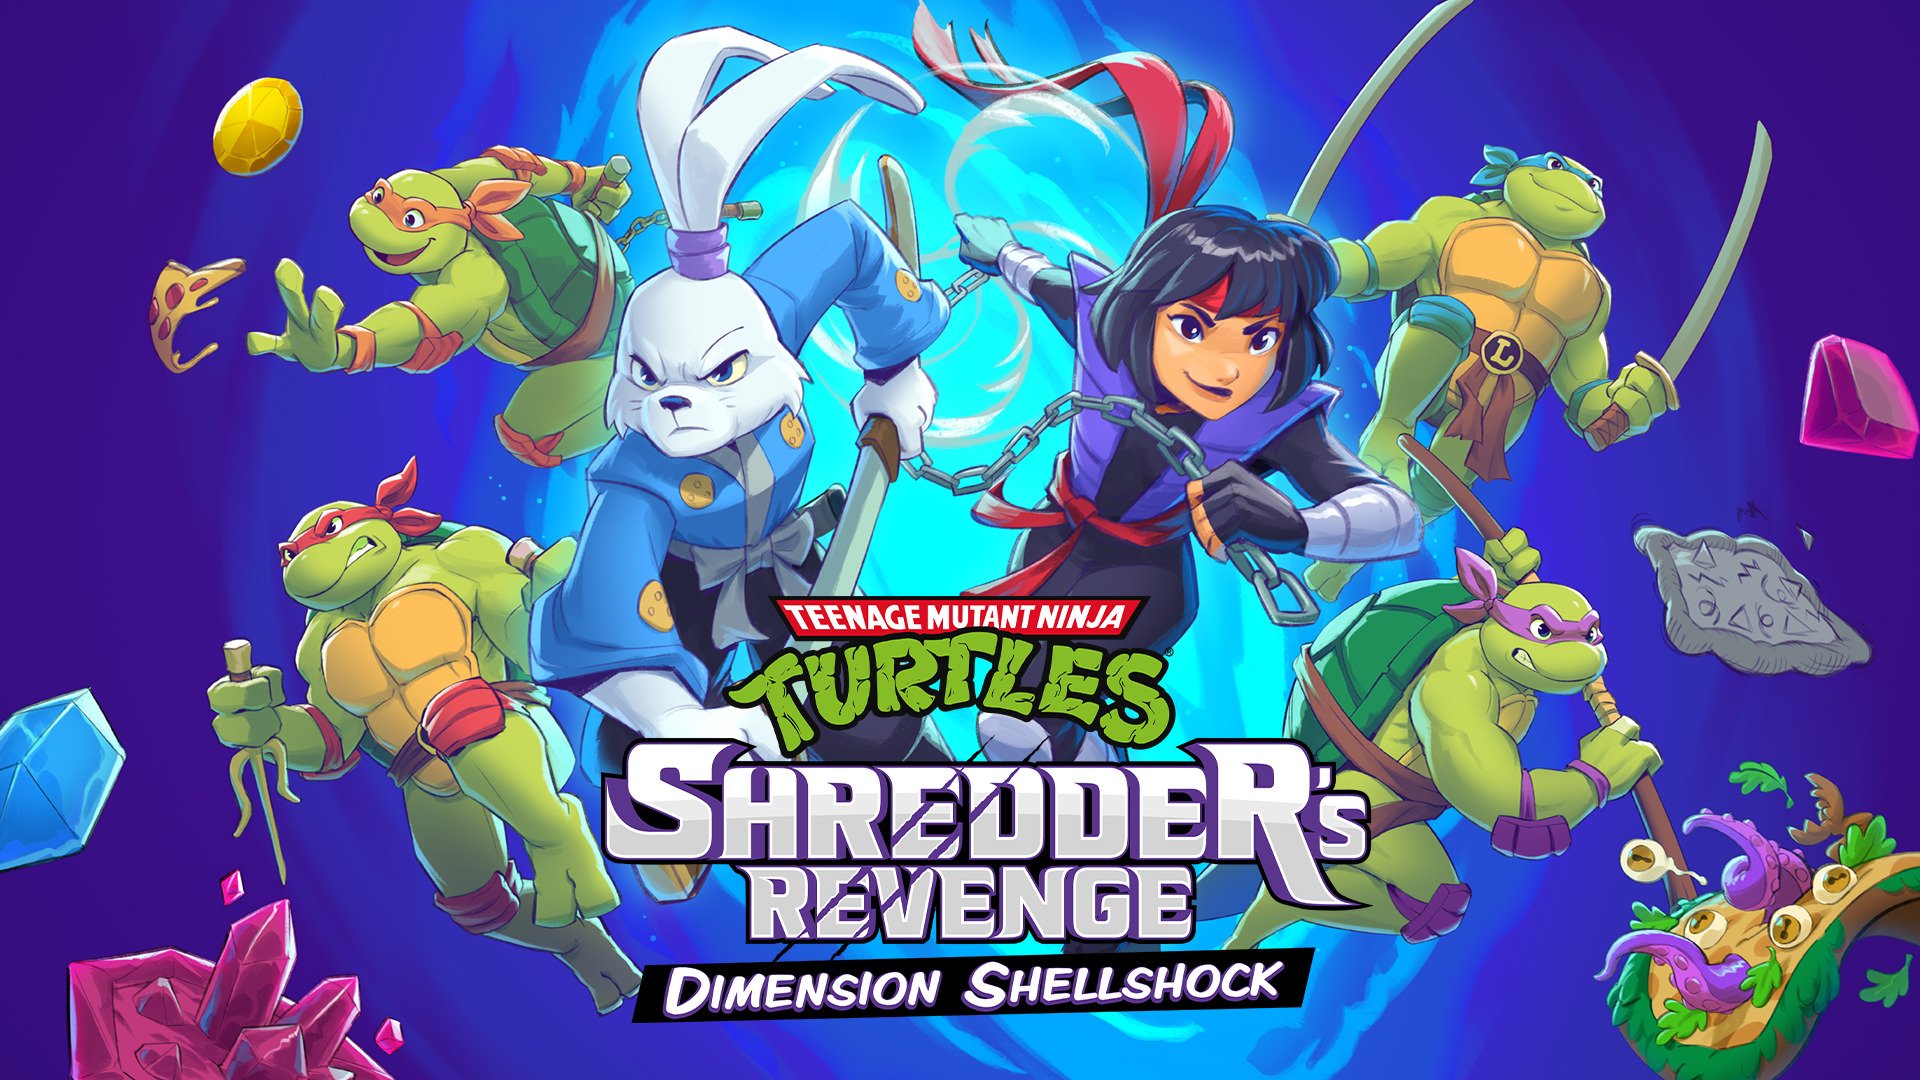 Teenage Mutant Ninja Turtles: Shredder’s Revenge ‘Dimension Shellshock’ DLC komt uit op 31 augustus